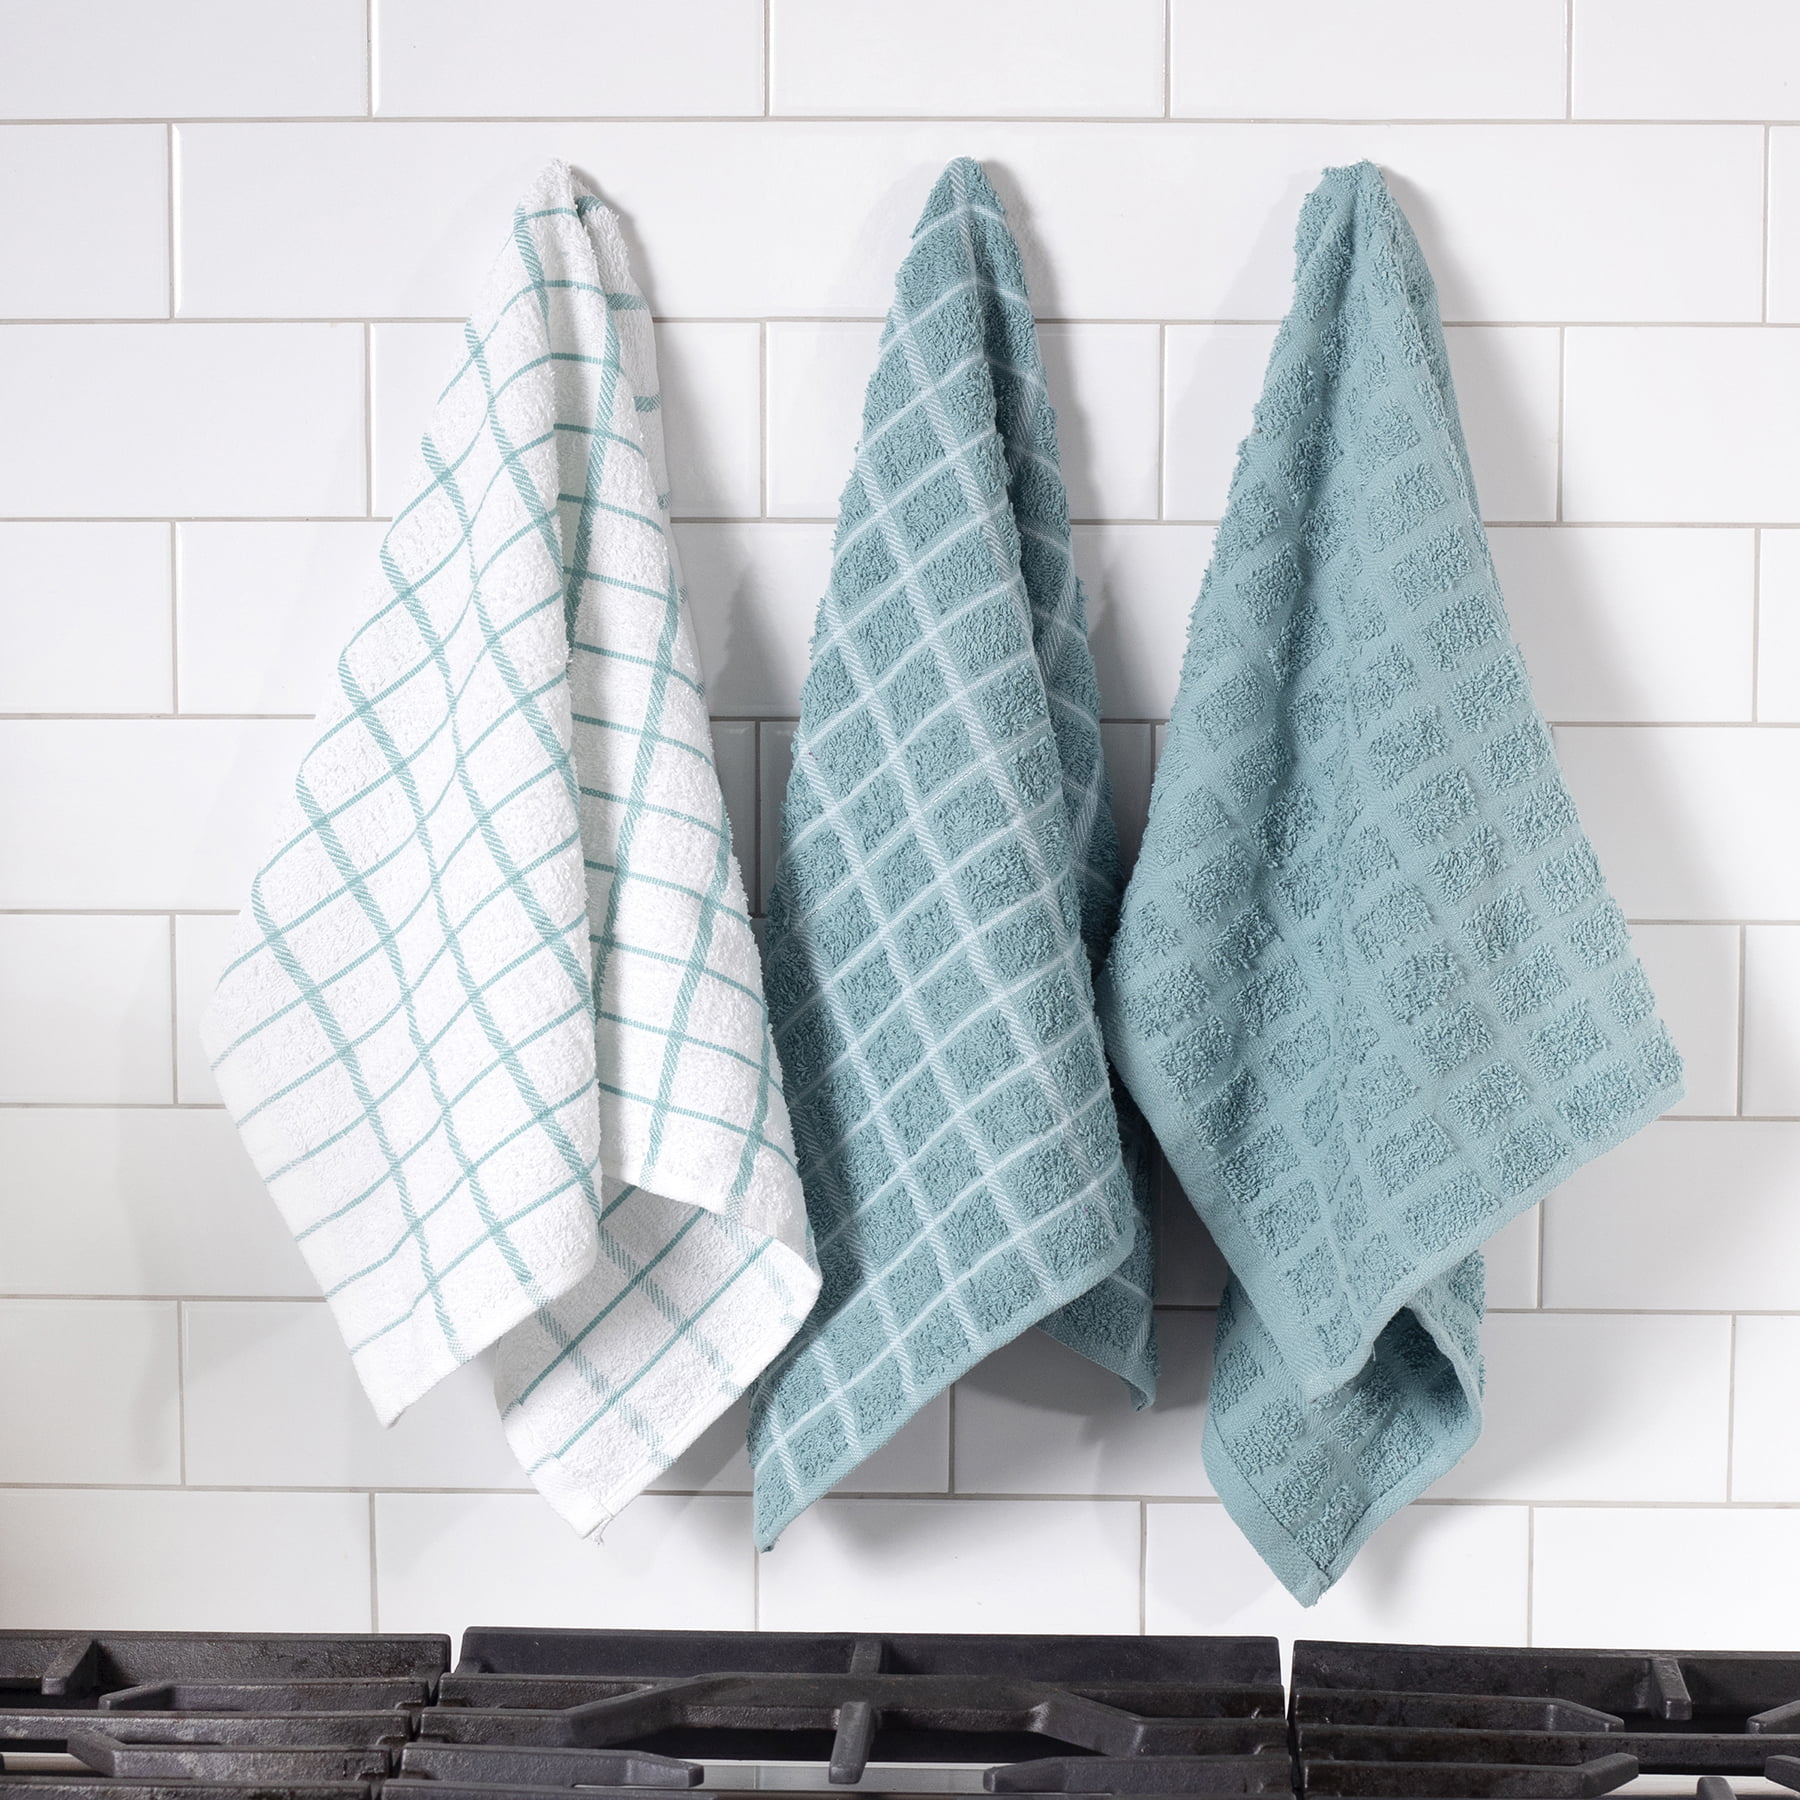 Ritz Ritz Terry Cloth Dish Towel Set 3 Pack 82424 – Good's Store Online